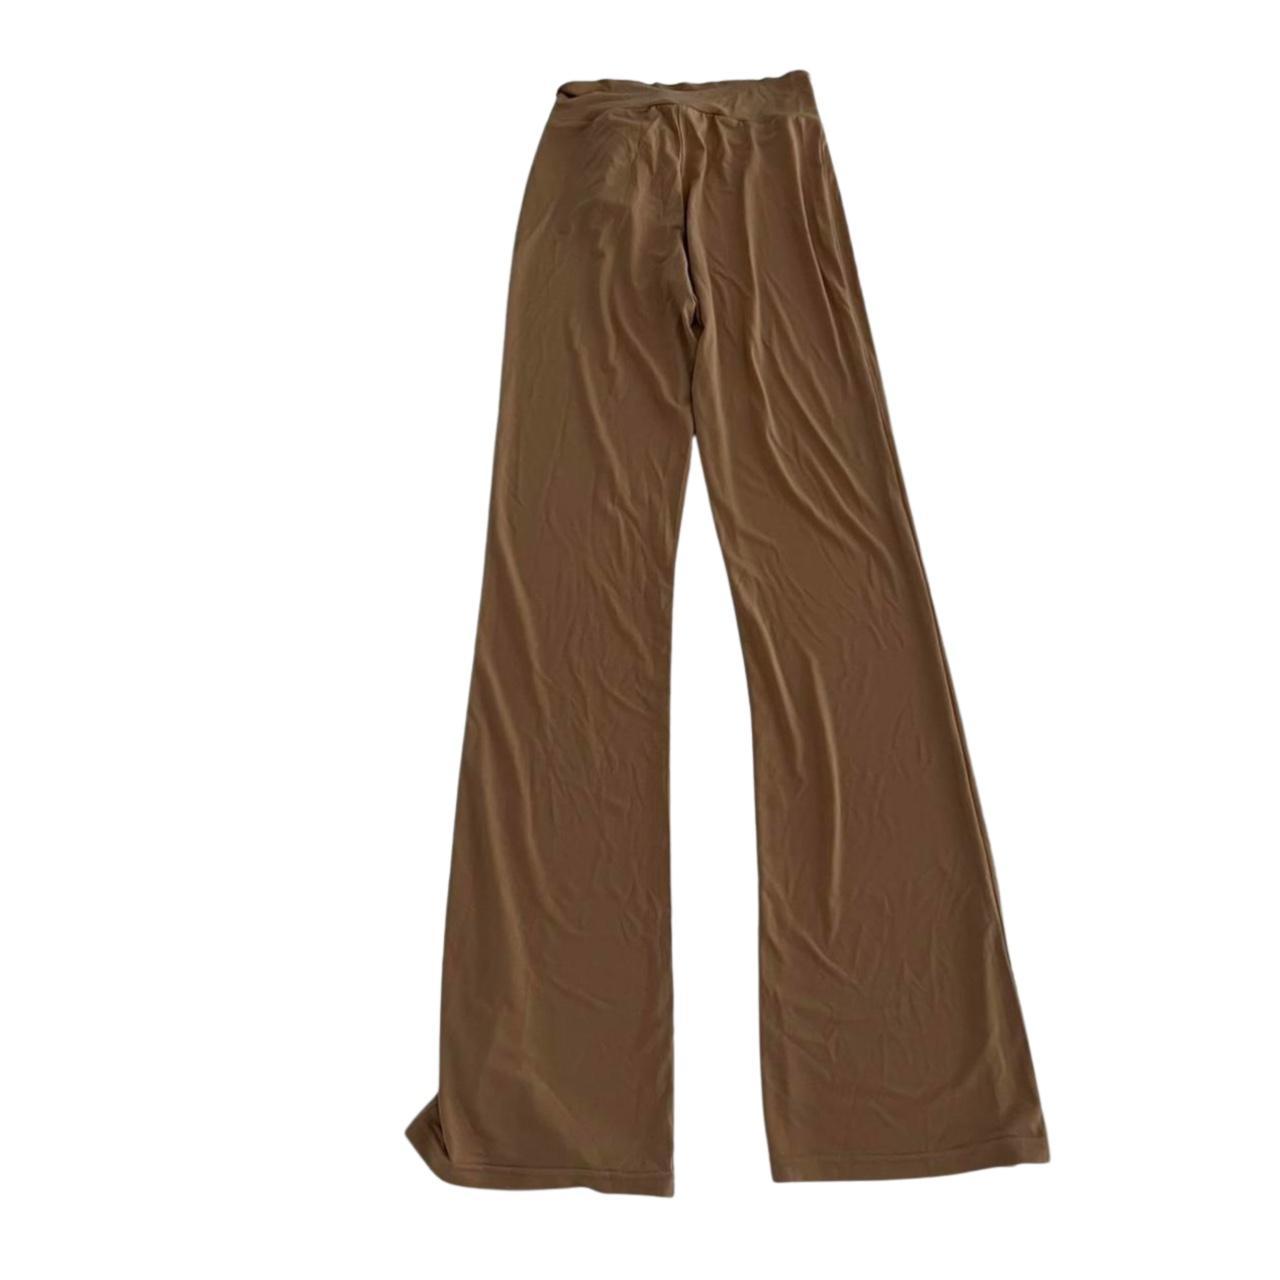 Product Image 2 - I.AM.GIA brand new tan pants
Size: